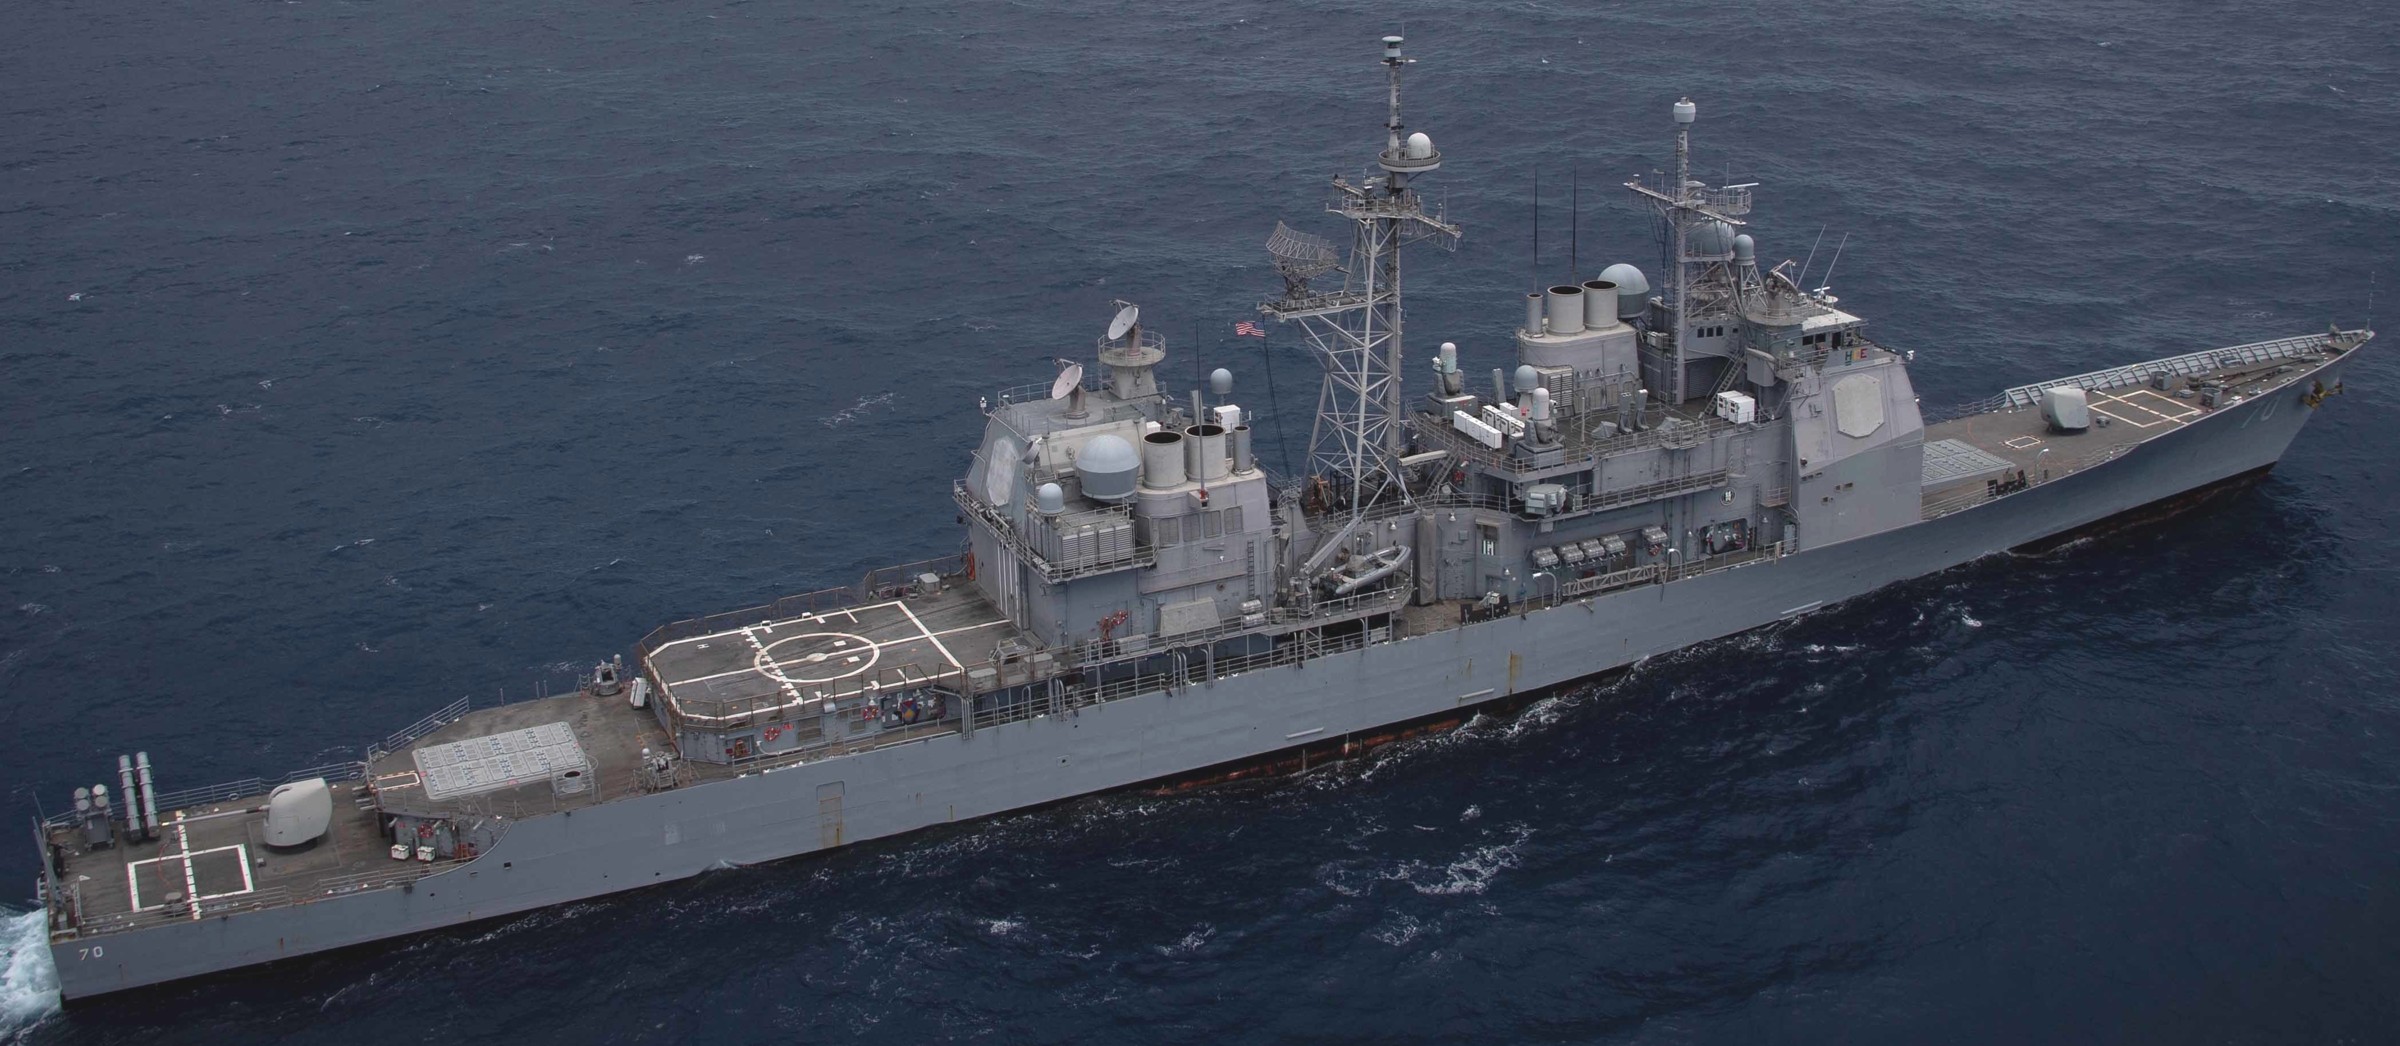 cg-70 uss lake erie ticonderoga class guided missile cruiser us navy rimpac 2020 132